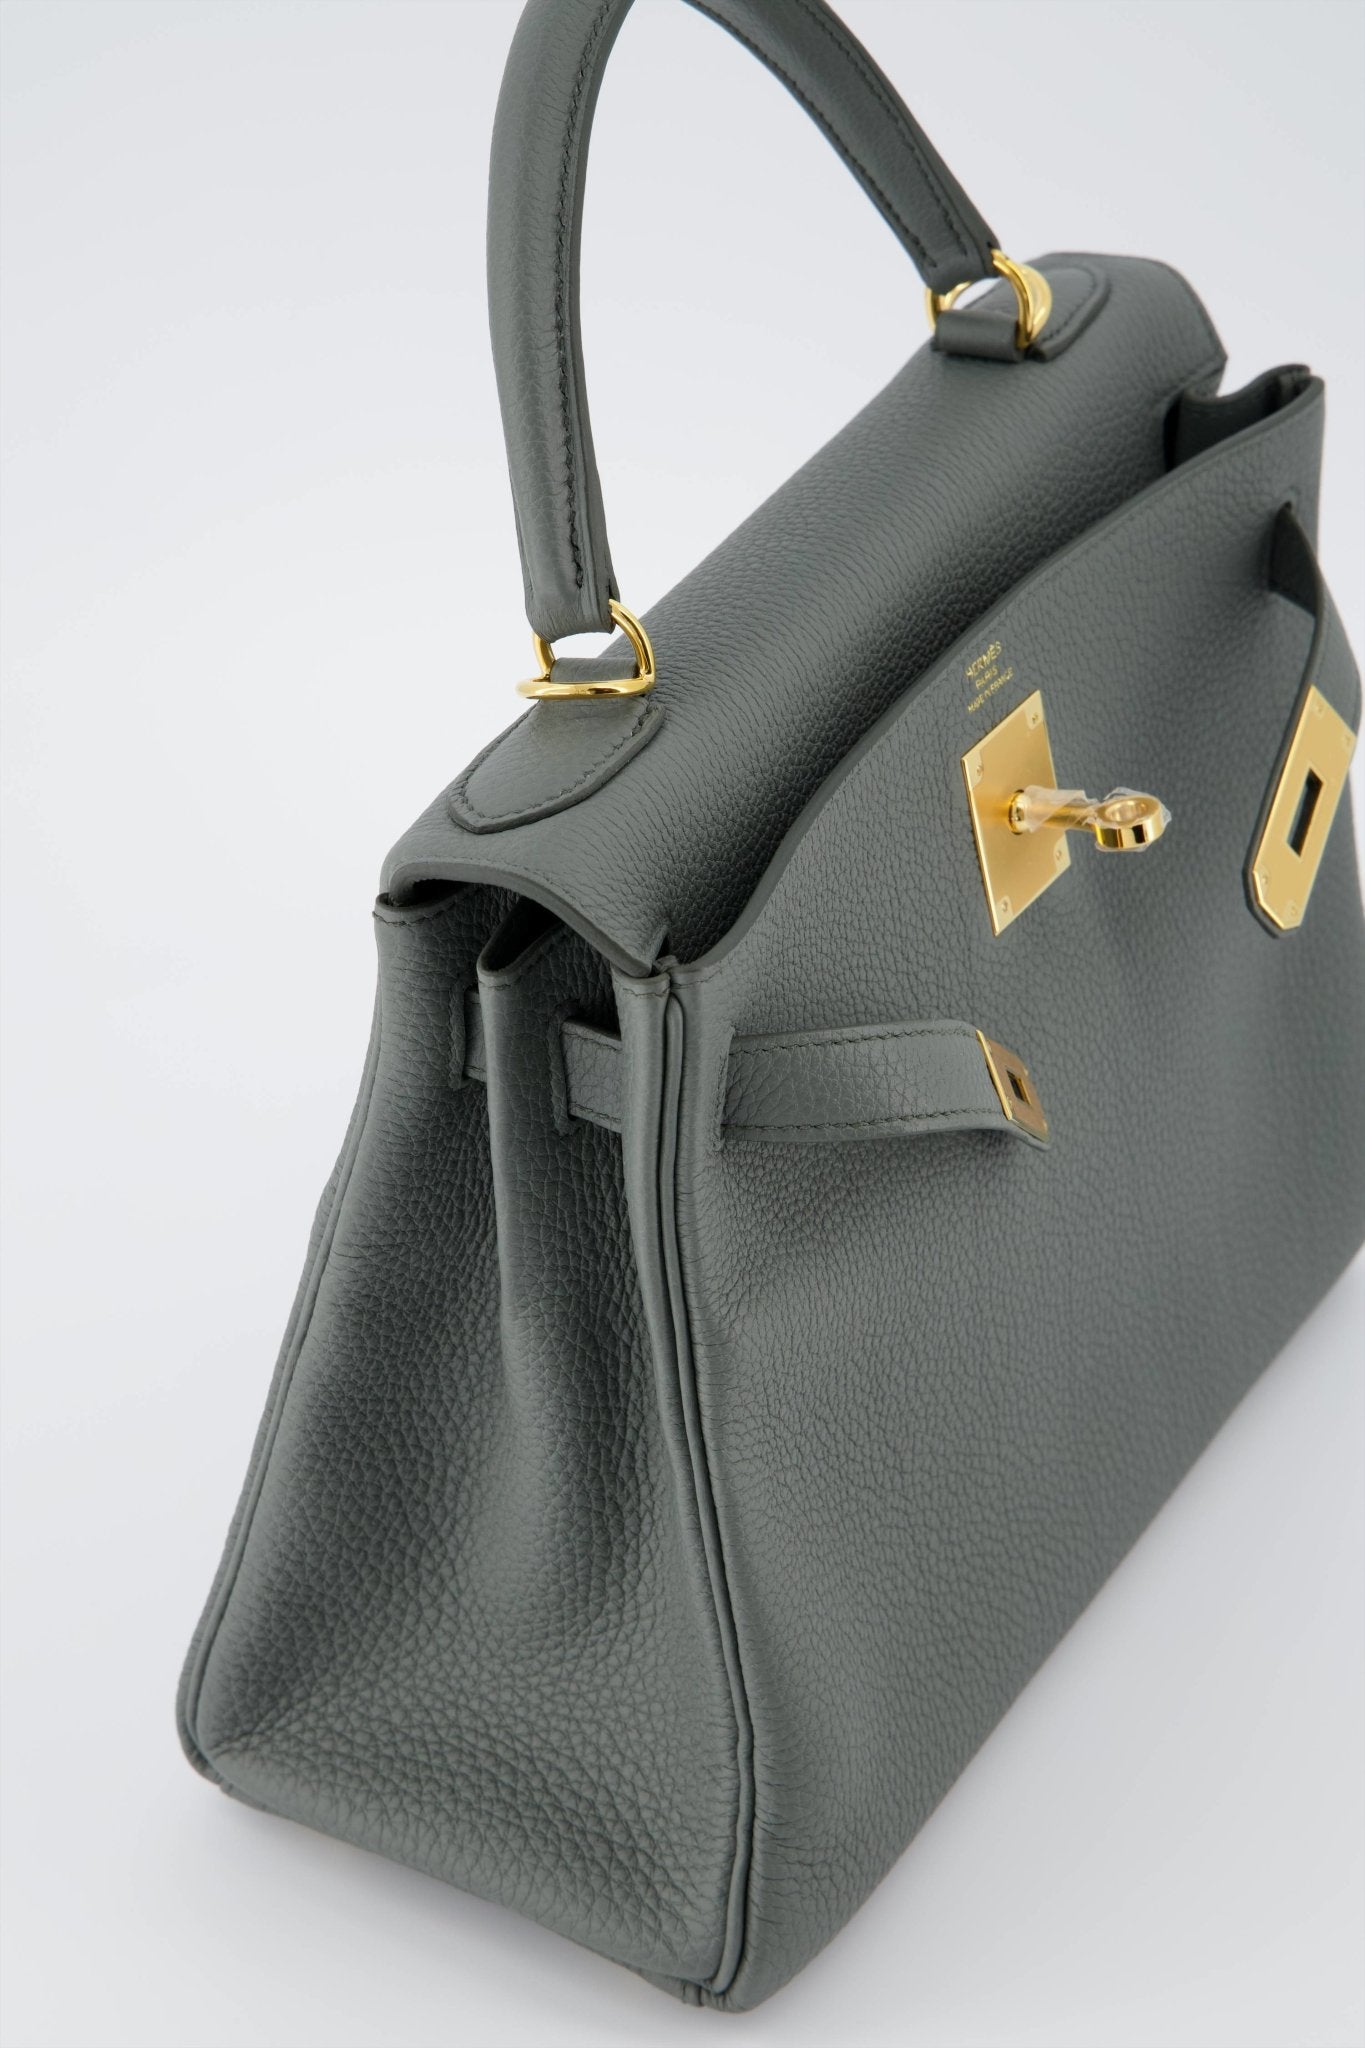 HERMÈS Kelly 25 handbag in Vert Amande Togo leather with Gold